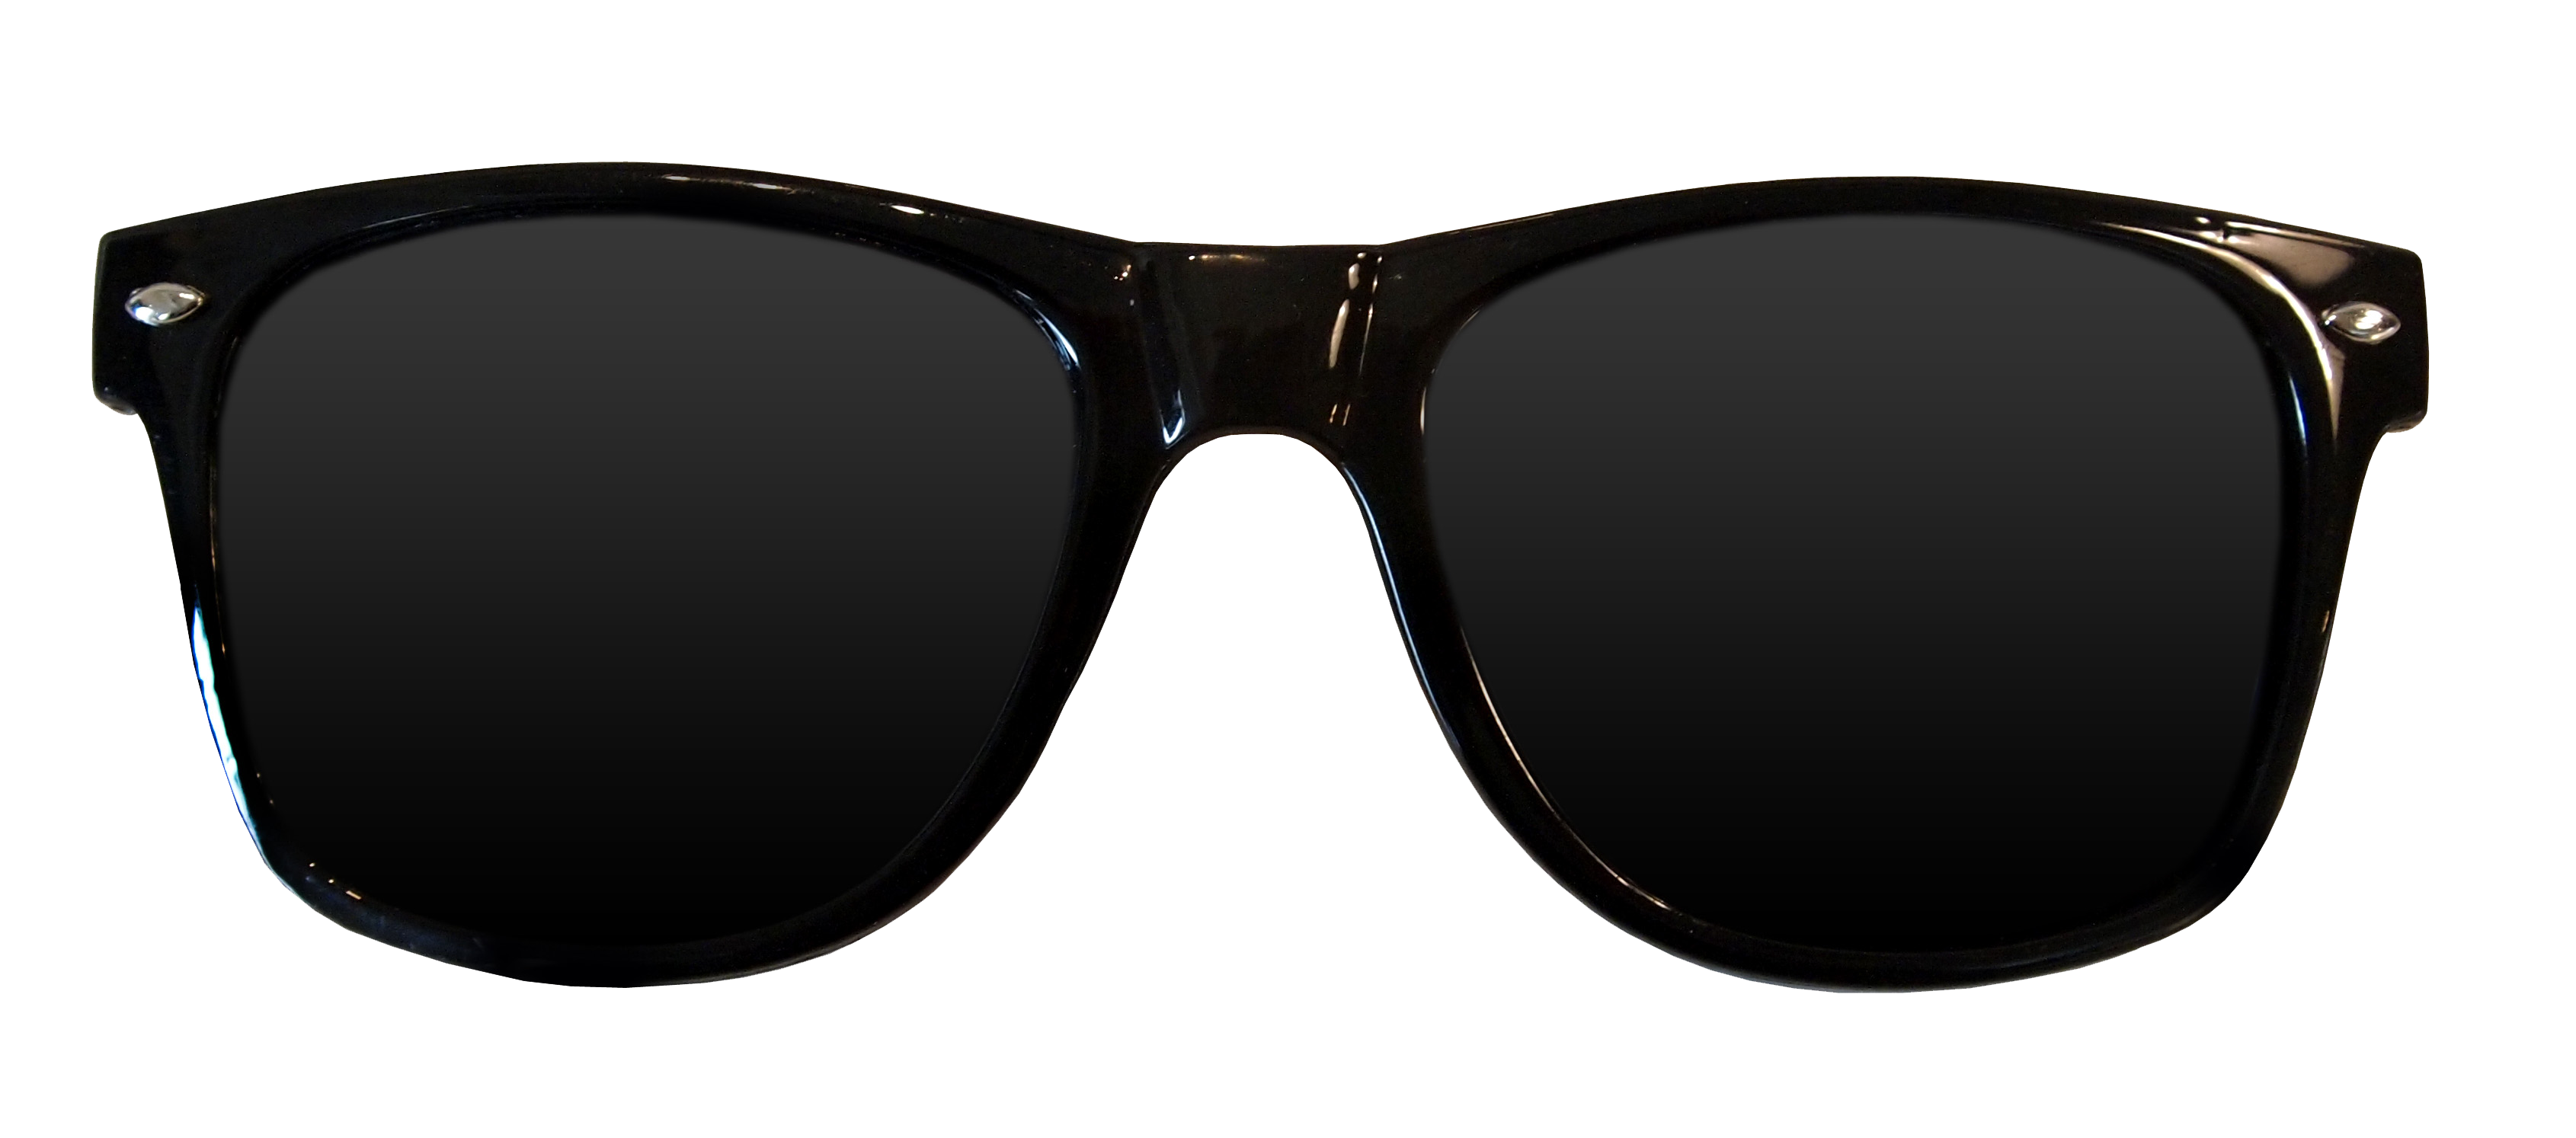 Sunglasses Ray Ban Wayfarer Lens Sunglasses Picture Png Download 3381 1494 Free